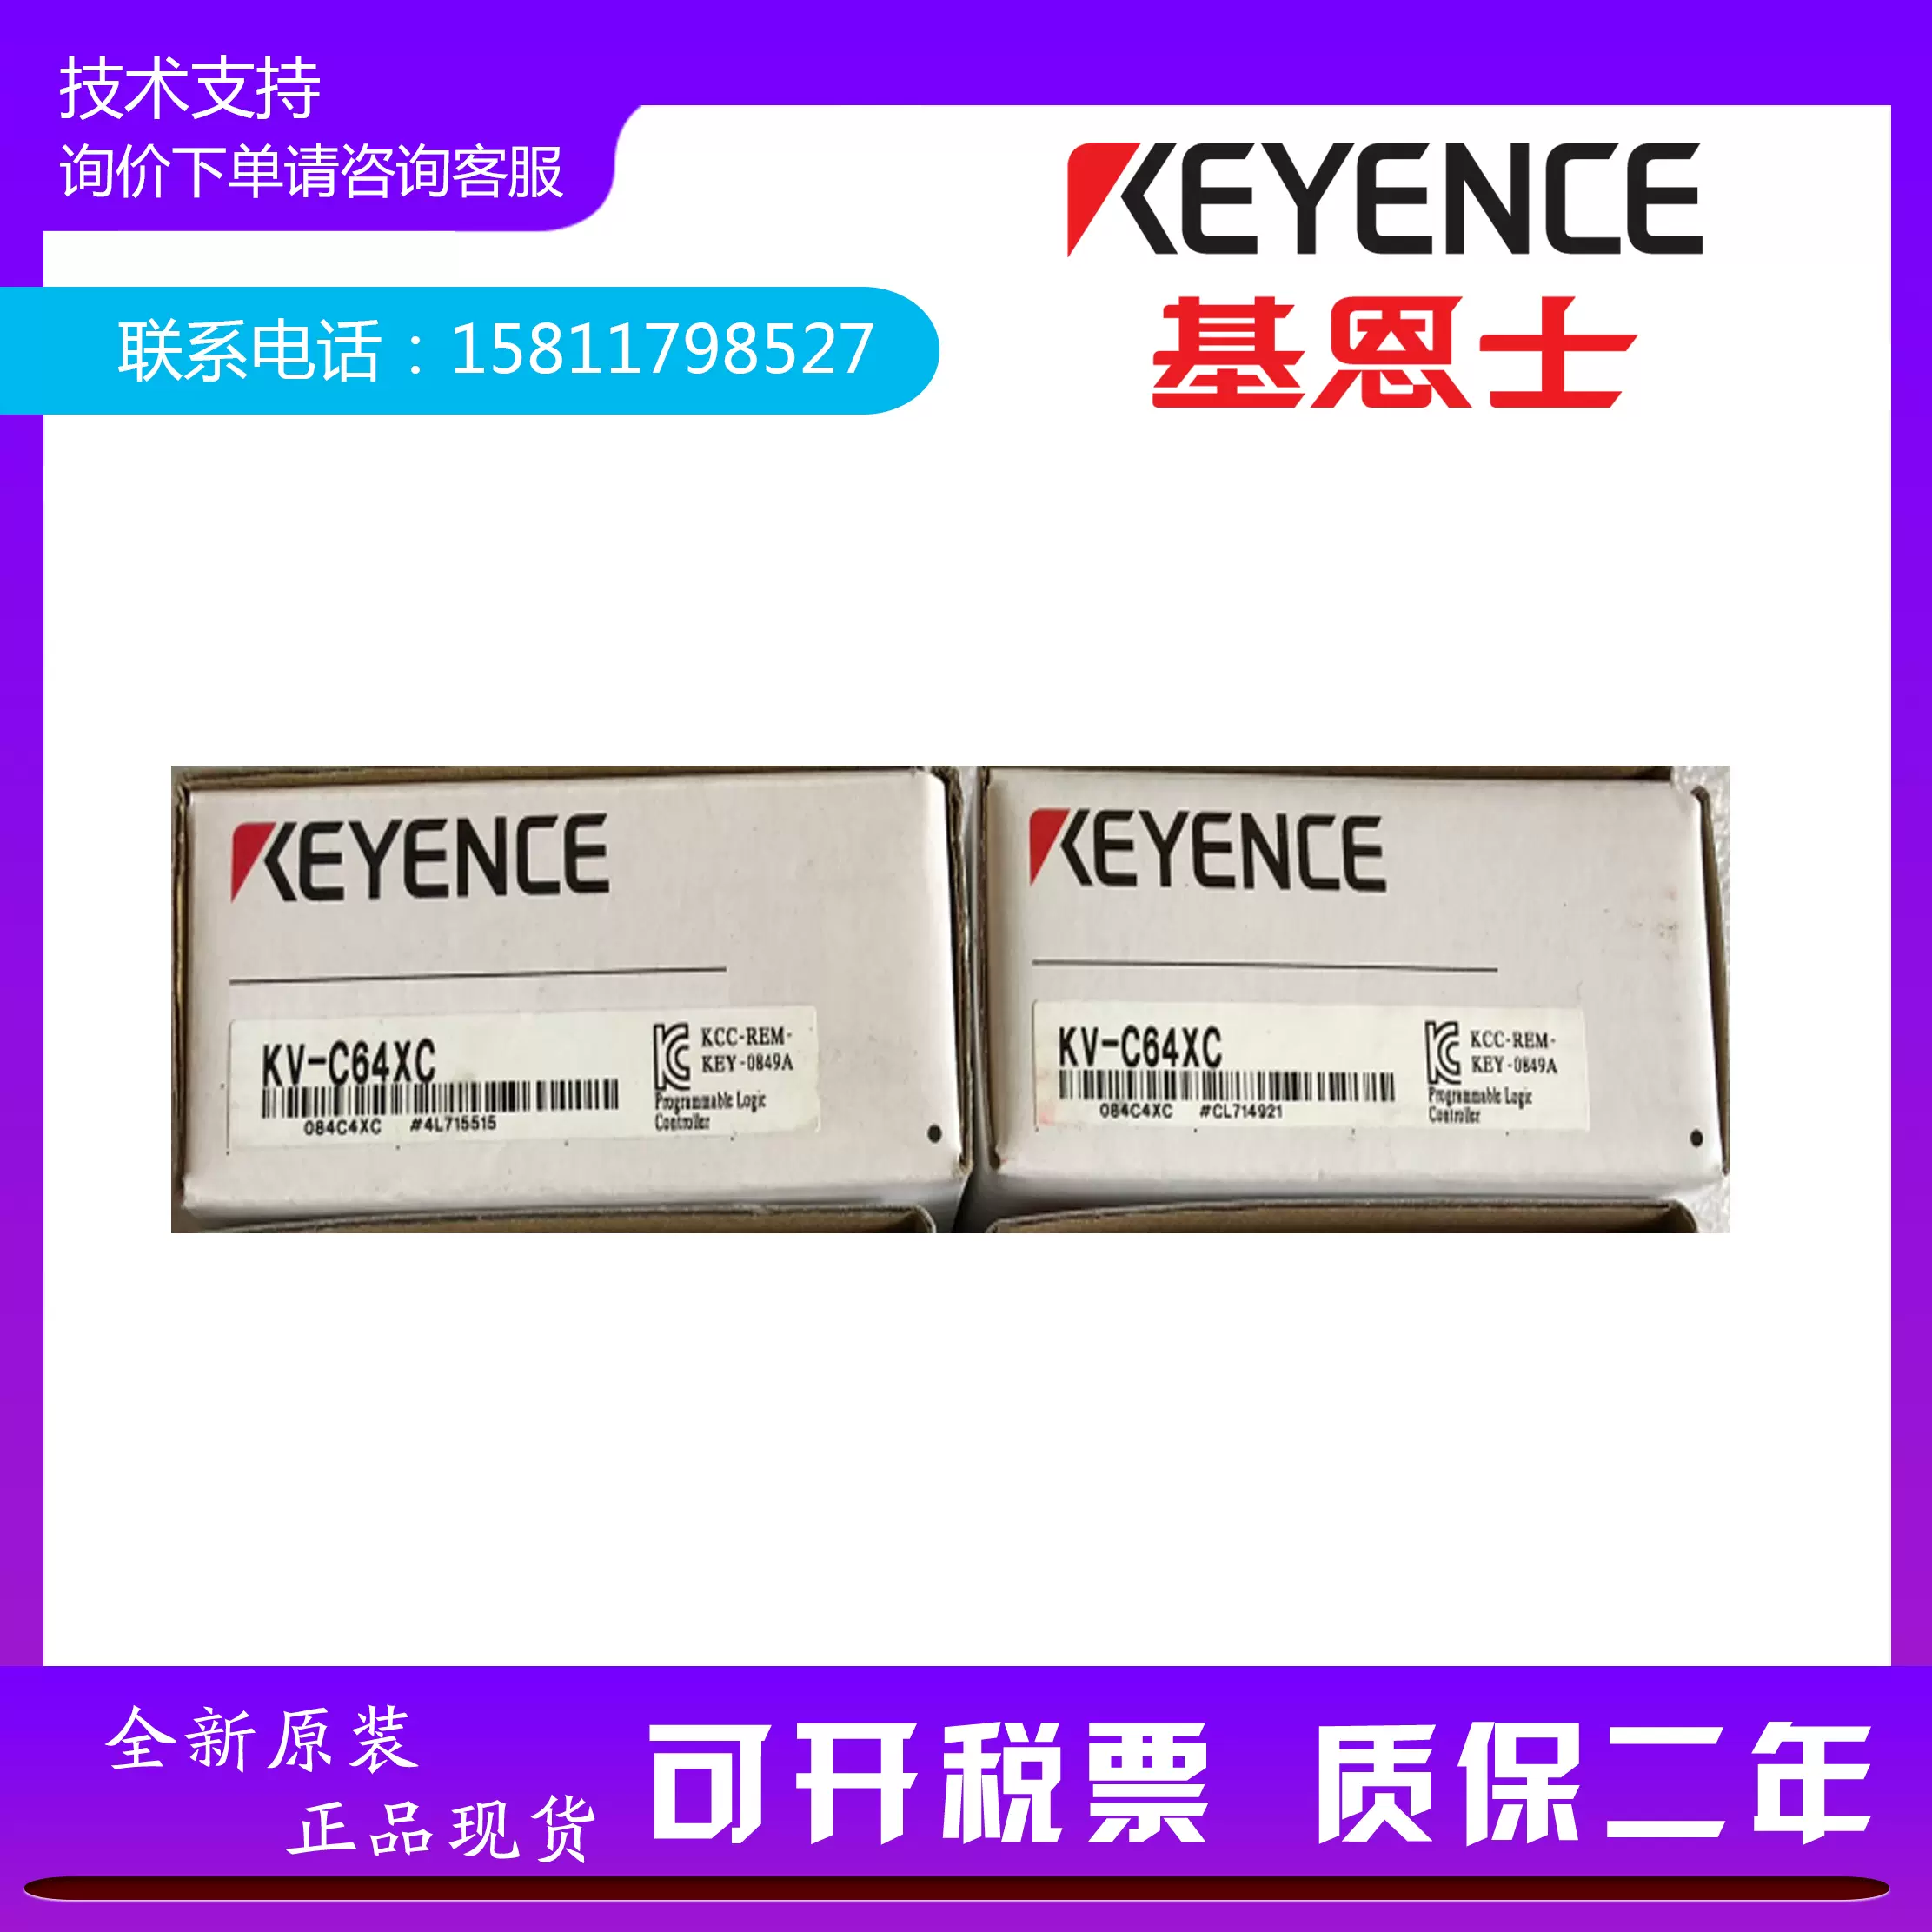 KV-C64TC KV-C64XC 基恩士KEYENCE模块全新原装正品质保一议价-Taobao